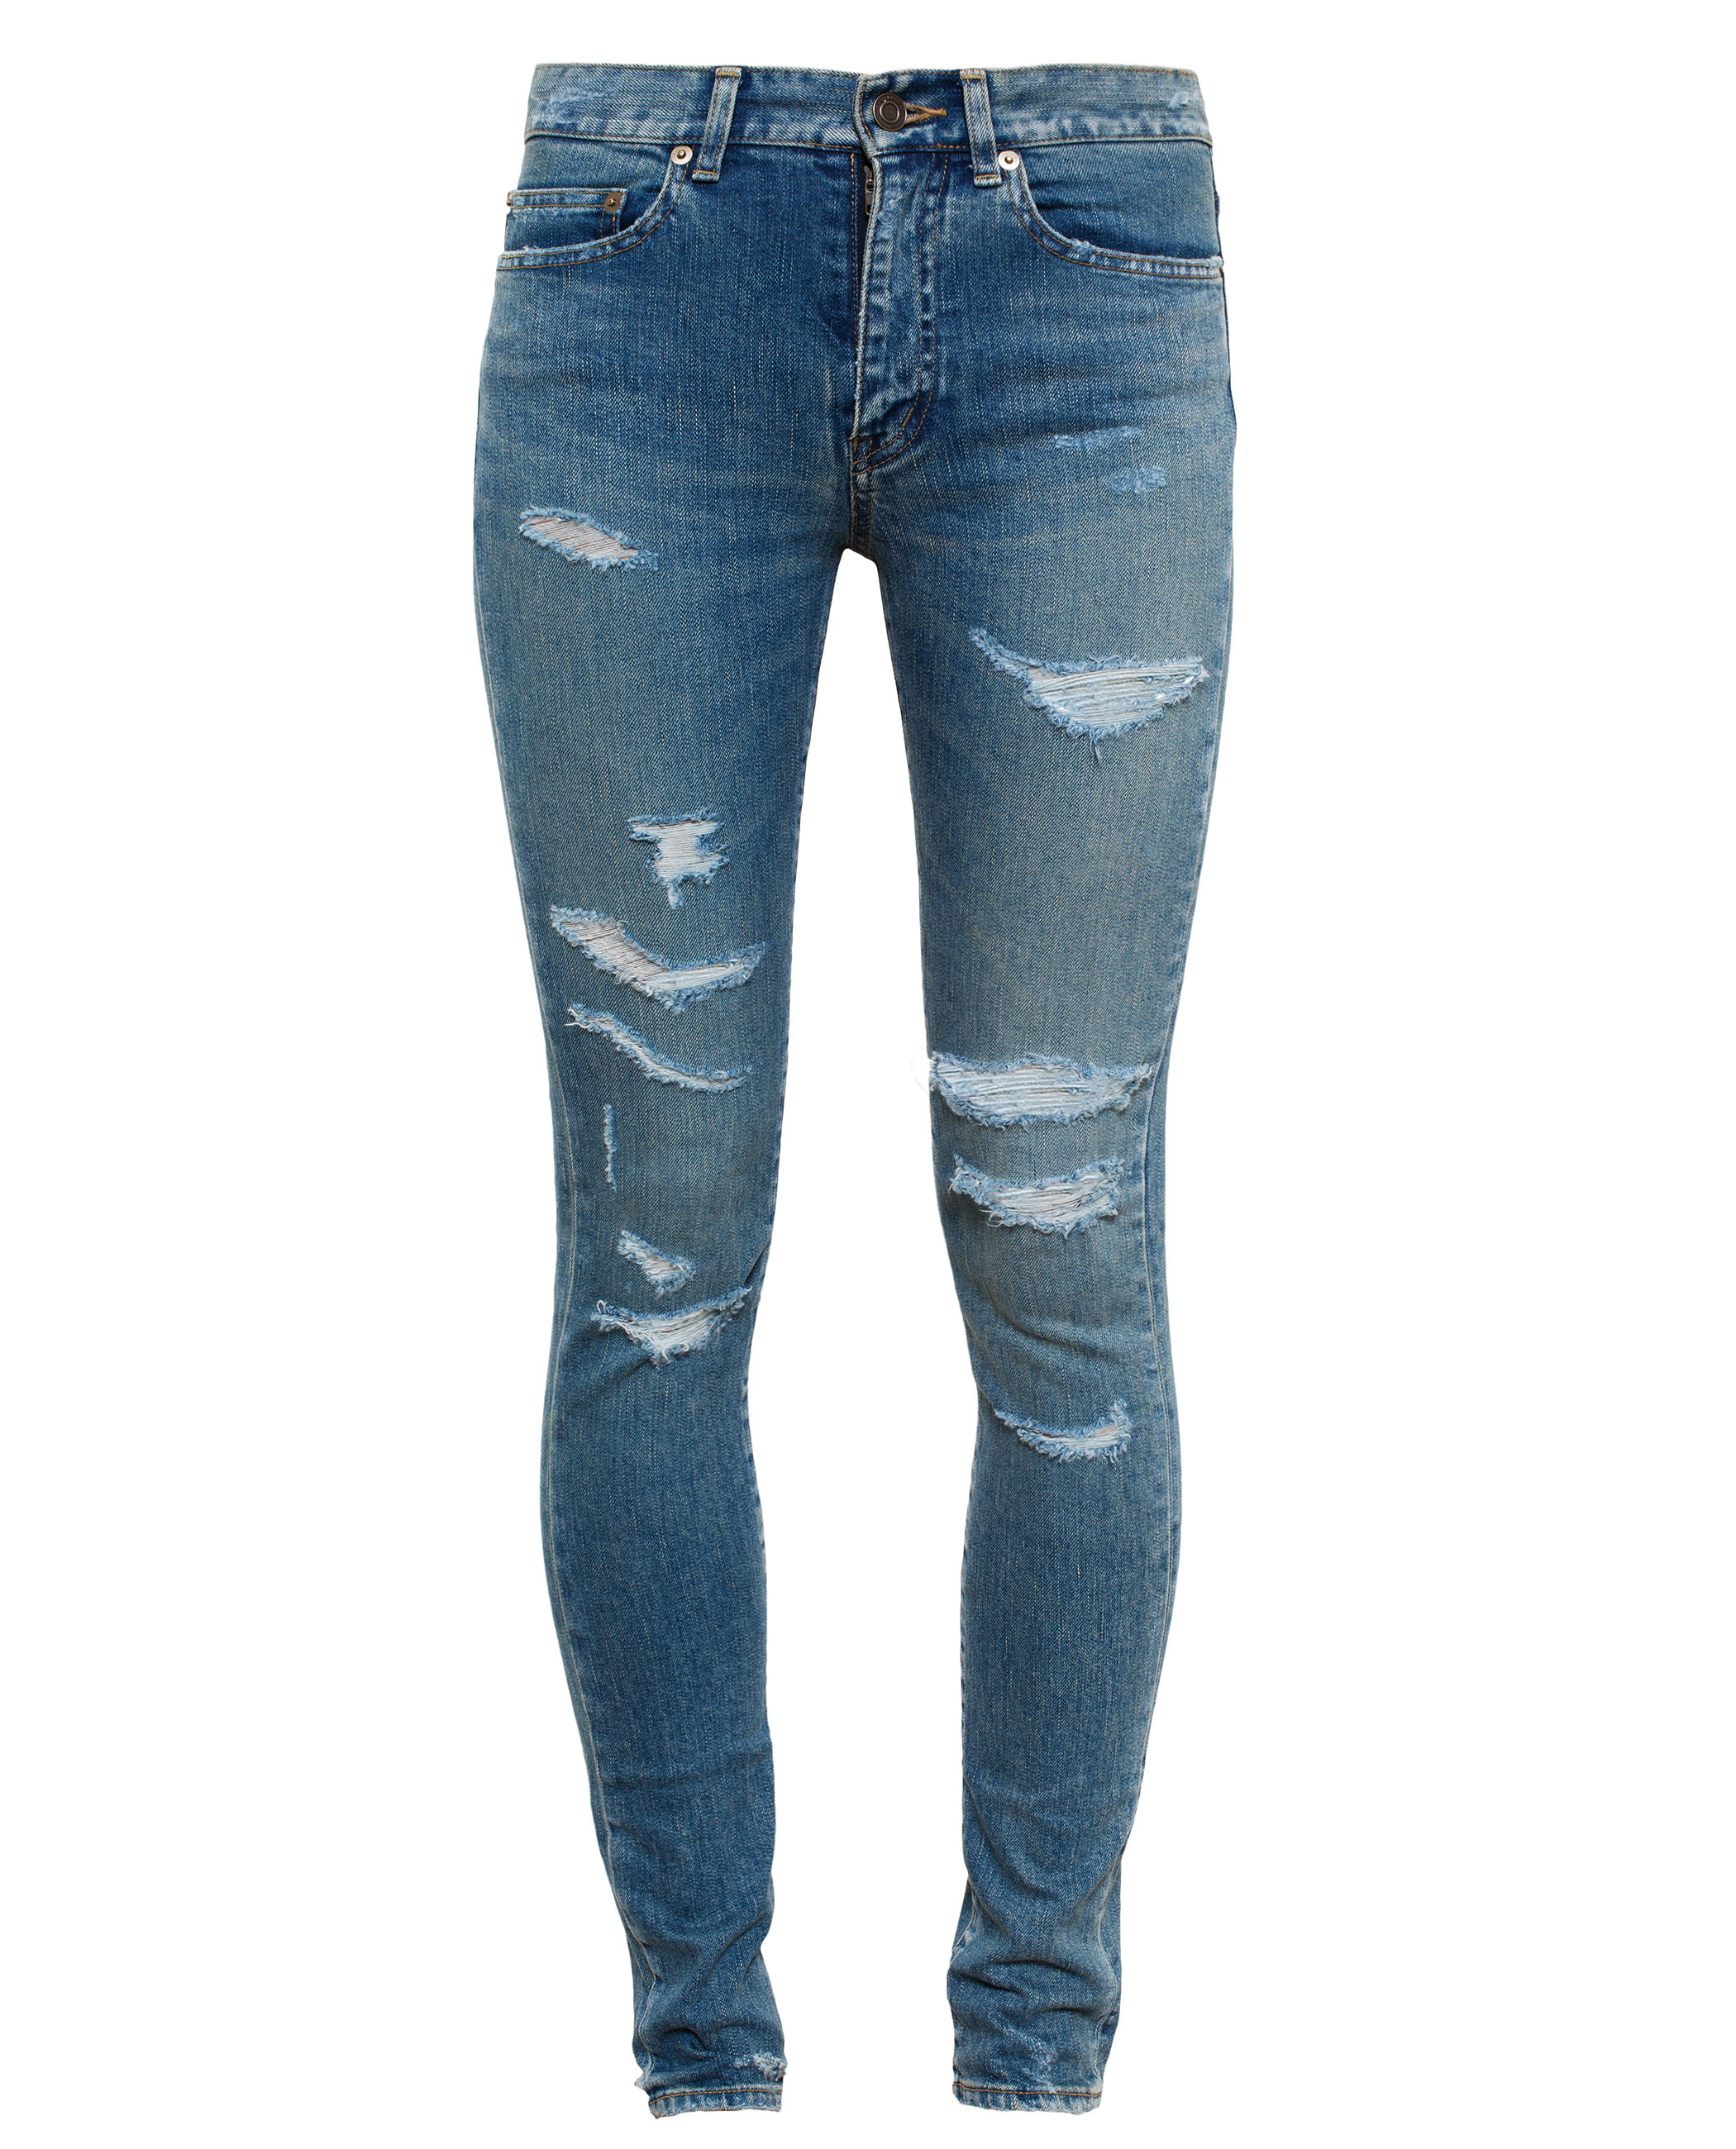 Saint Laurent Denim Distressed Jeans in Denim (Blue) - Lyst